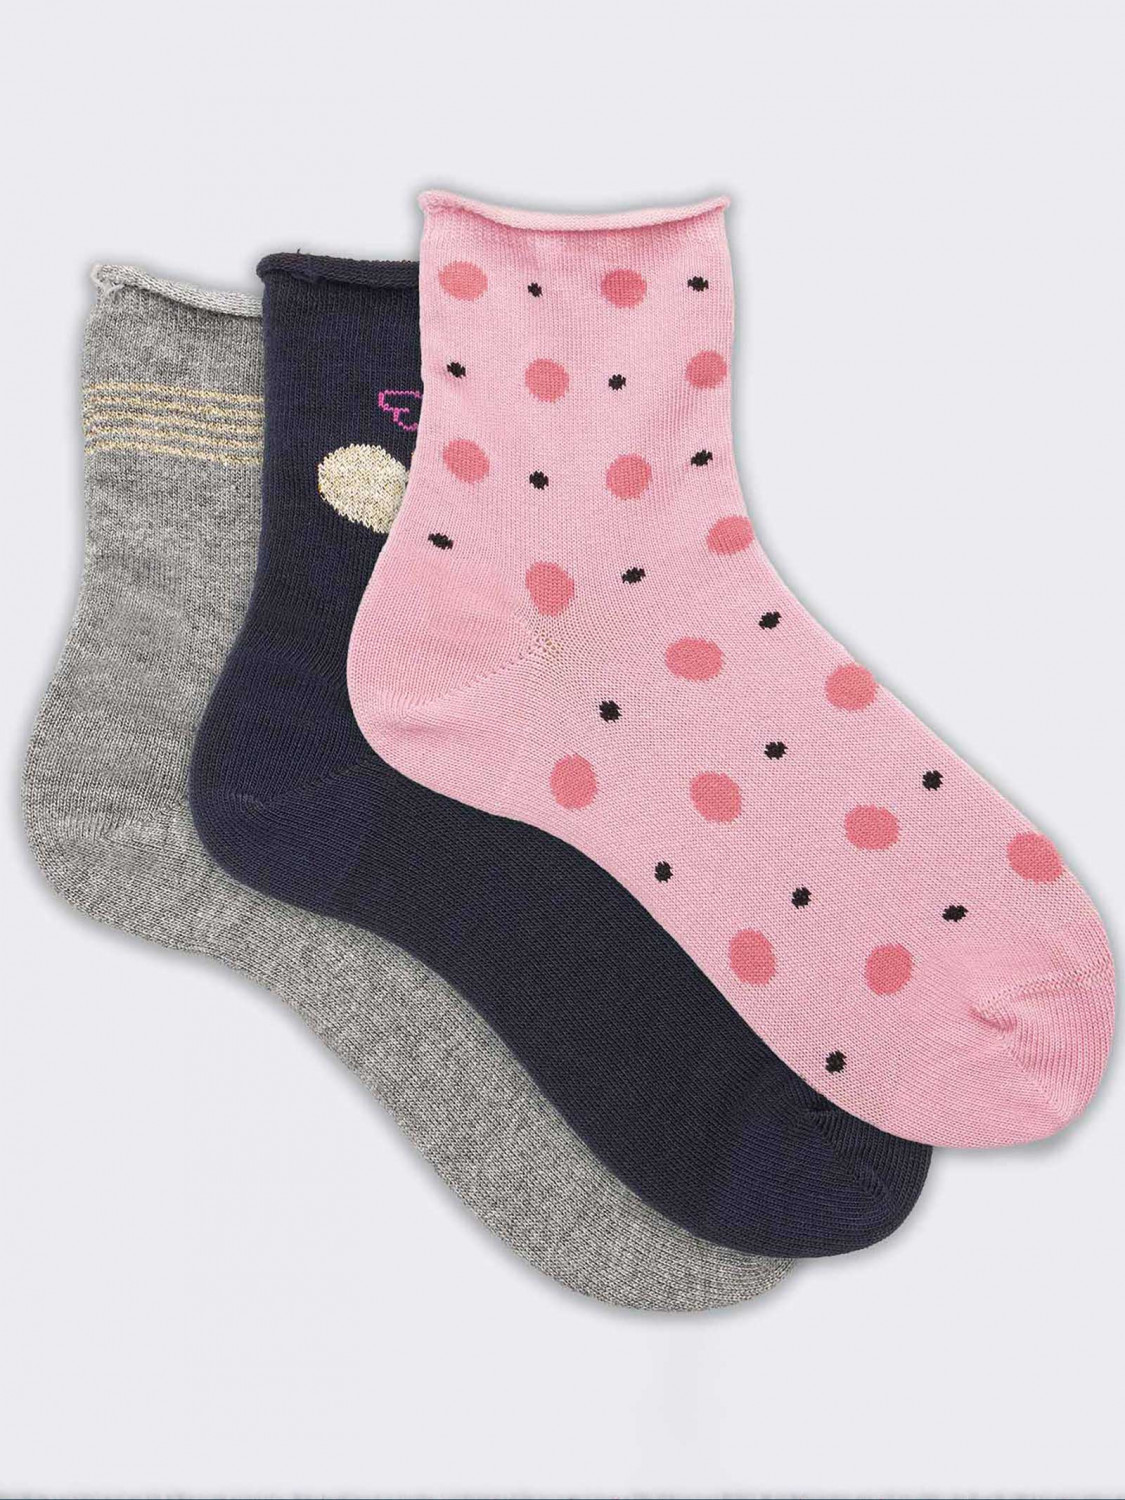 Short patterned socks for girls. In warm cotton